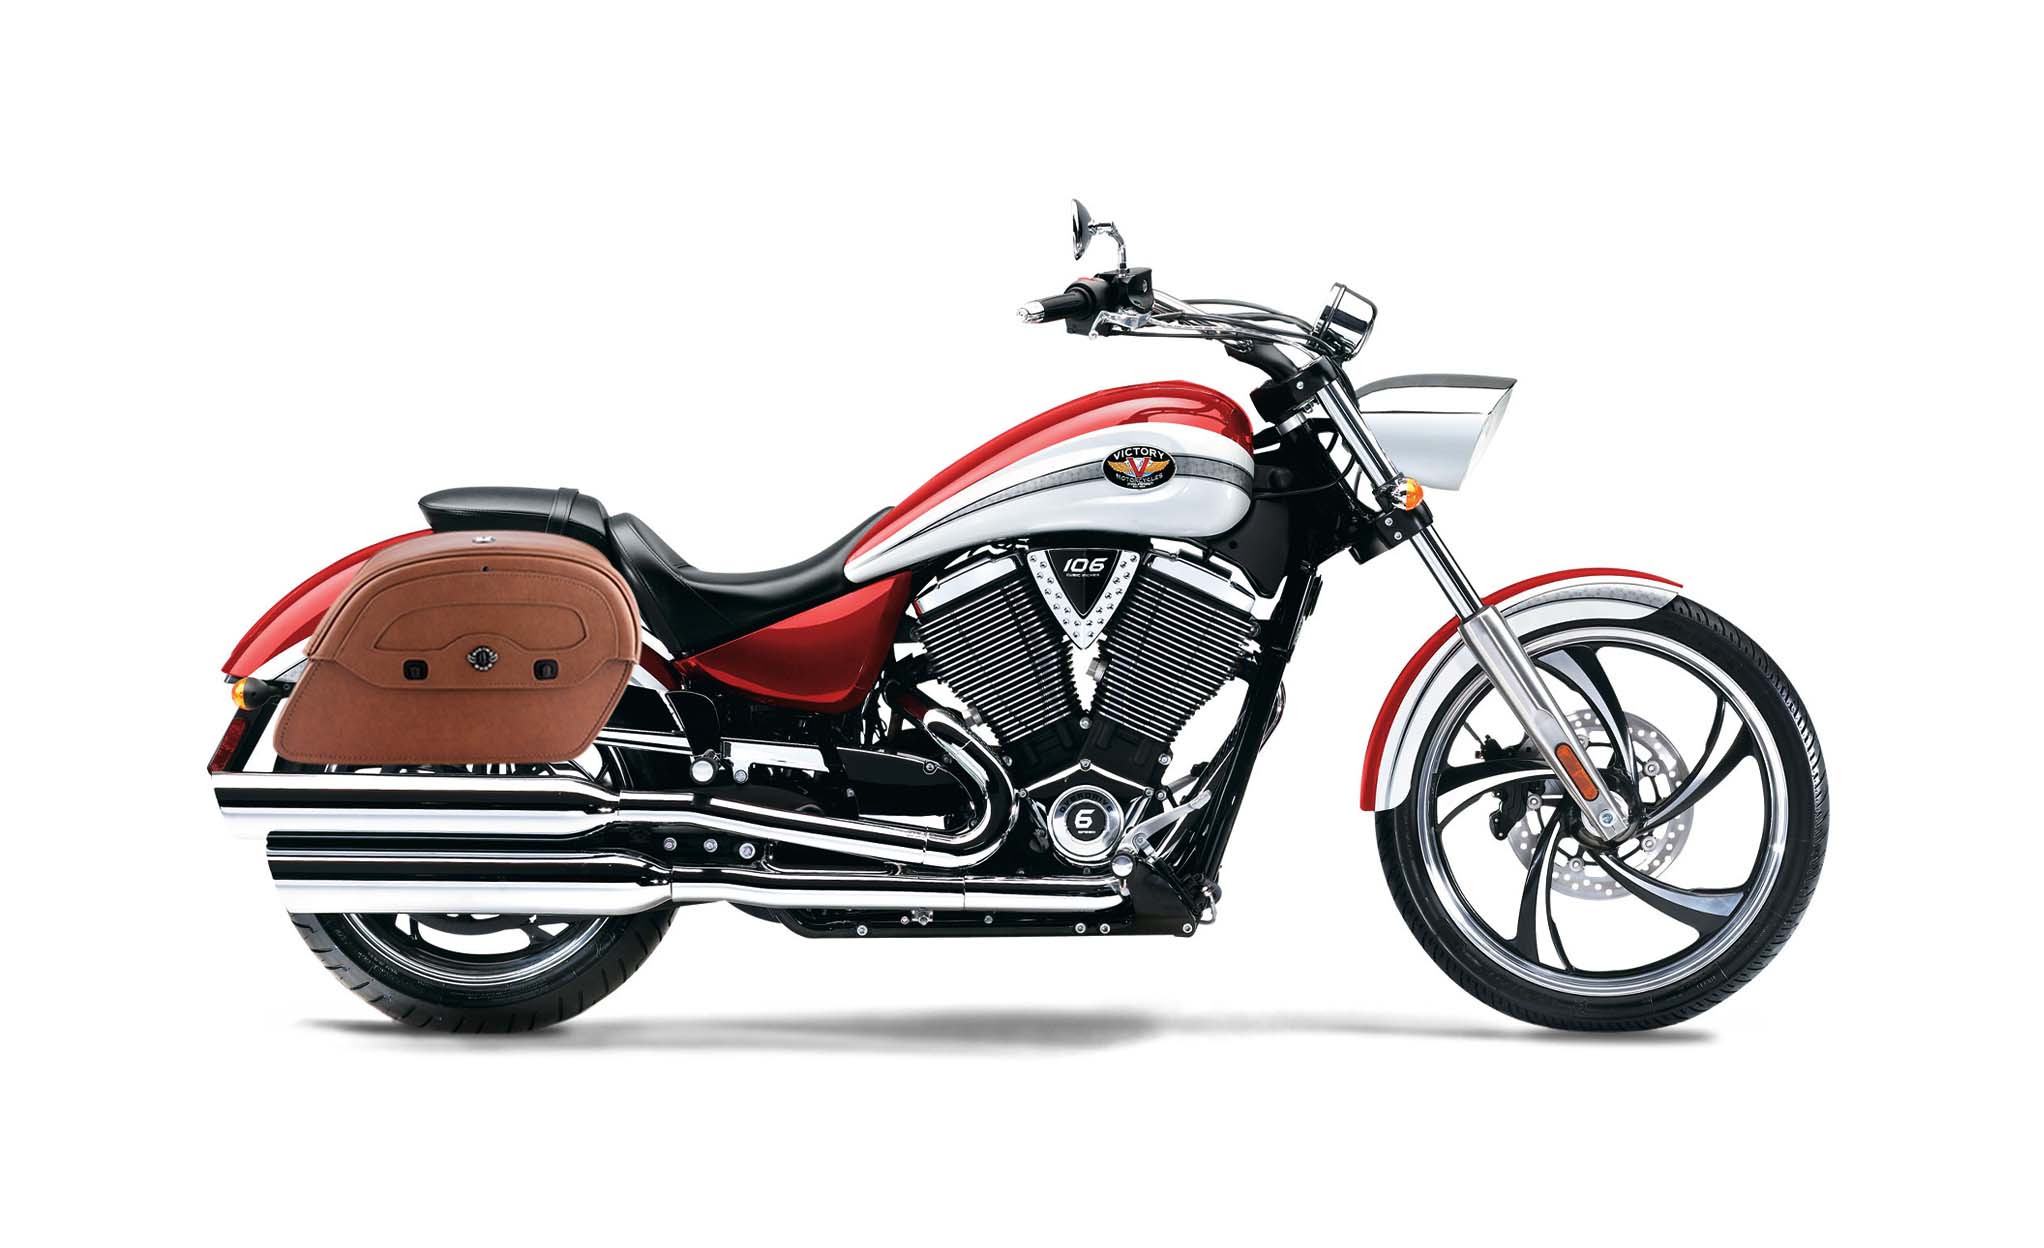 Viking Warrior Brown Large Victory Vegas Leather Motorcycle Saddlebags on Bike Photo @expand